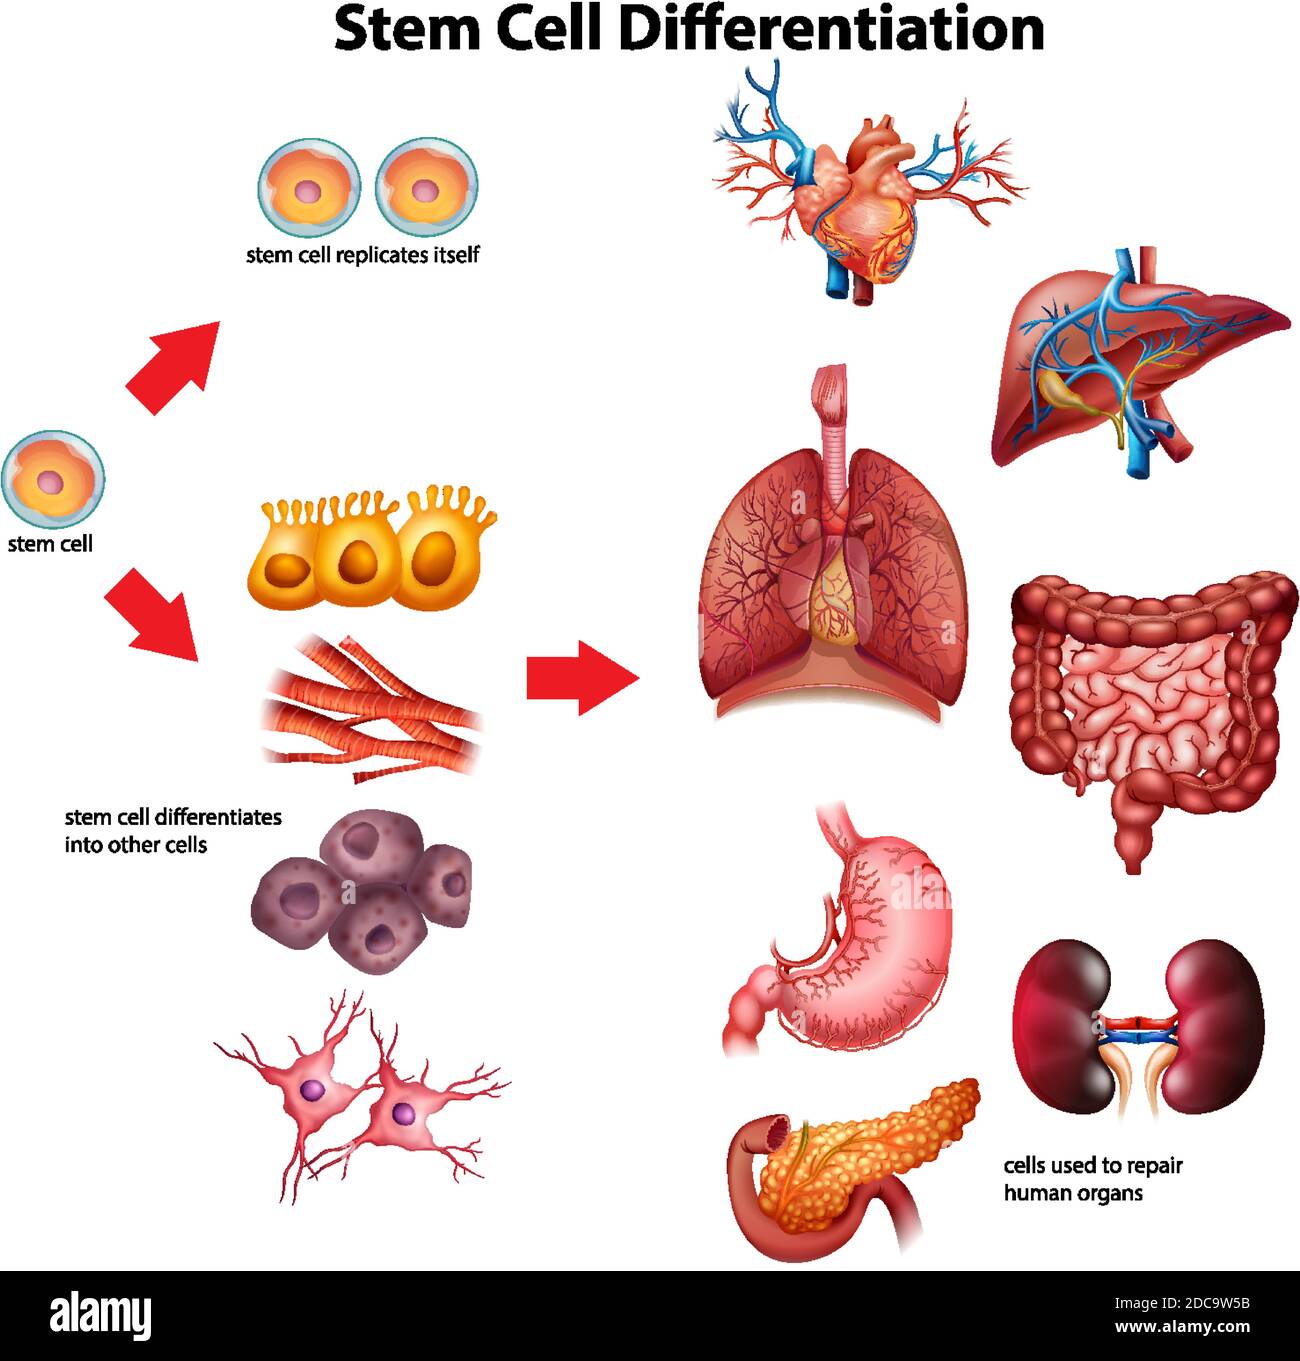 Stem cell differentiation diagram illustration Stock Vector